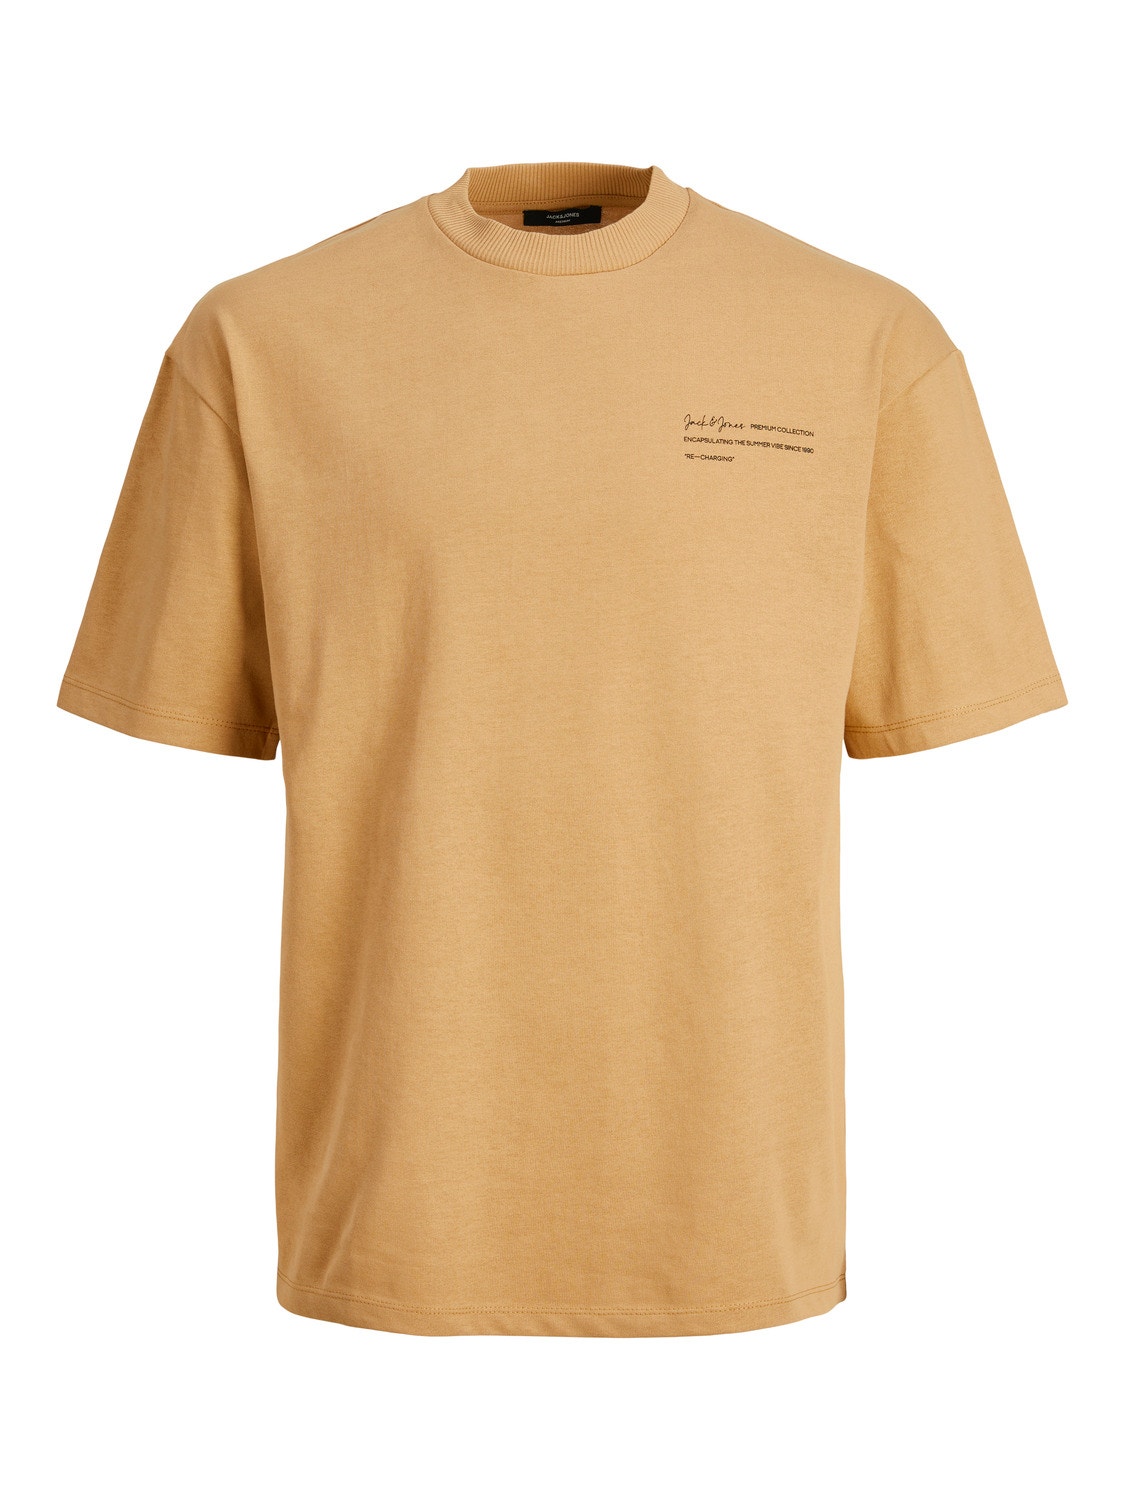 Jack & Jones T-shirt Estampar Decote Redondo -Iced Coffee - 12236394